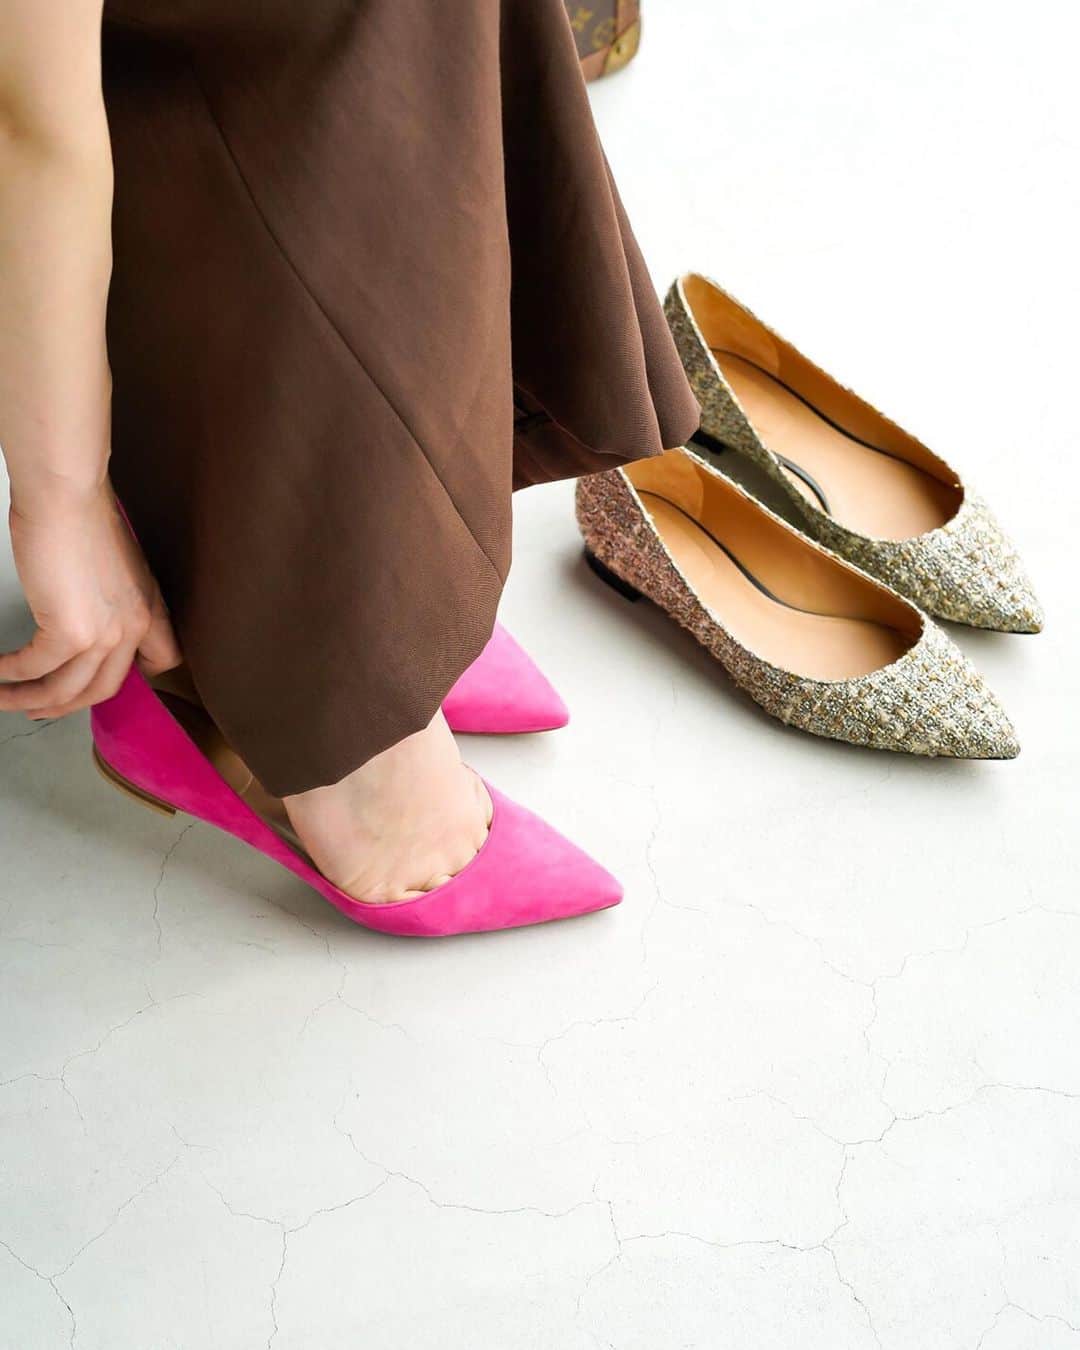 VERMEIL par ienaさんのインスタグラム写真 - (VERMEIL par ienaInstagram)「『大人の足もとを彩る“ LAURENCE ”』 ﻿﻿﻿﻿﻿﻿﻿﻿﻿﻿﻿﻿﻿﻿﻿﻿﻿﻿﻿﻿﻿﻿﻿﻿﻿﻿﻿﻿﻿﻿﻿﻿﻿﻿﻿﻿﻿﻿﻿﻿﻿﻿﻿﻿﻿﻿﻿﻿﻿﻿﻿﻿﻿﻿﻿﻿﻿﻿﻿﻿﻿﻿﻿﻿﻿﻿﻿﻿﻿﻿﻿﻿﻿ ﻿﻿﻿﻿﻿﻿﻿﻿﻿﻿﻿﻿﻿﻿﻿﻿﻿﻿﻿﻿﻿﻿﻿﻿﻿﻿ ﻿﻿﻿﻿﻿﻿﻿﻿﻿﻿﻿﻿﻿ ﻿ ﻿﻿﻿﻿﻿2019aw “LAURENCE”のコレクションが届きました。﻿ ﻿ Shoes: 38,000yen+tax / LAURENCE﻿ Shoes(tweed): 40,000yen+tax / LAURENCE﻿ ﻿ @laurence.shoes ﻿ ﻿ ㅤㅤㅤ﻿﻿﻿﻿﻿﻿﻿﻿﻿﻿﻿﻿﻿﻿﻿﻿﻿﻿ ㅤ﻿ㅤㅤㅤㅤㅤㅤㅤㅤㅤ﻿﻿﻿﻿﻿﻿﻿﻿﻿﻿﻿﻿﻿﻿﻿﻿﻿﻿﻿﻿﻿﻿﻿﻿﻿﻿﻿﻿﻿﻿﻿﻿﻿﻿﻿﻿﻿﻿﻿﻿﻿﻿﻿﻿﻿﻿﻿﻿﻿﻿﻿﻿﻿﻿﻿﻿﻿﻿﻿﻿﻿﻿﻿﻿﻿ #vermeilpariena #iena ﻿﻿﻿﻿﻿﻿﻿﻿﻿﻿﻿﻿﻿﻿﻿﻿﻿﻿﻿﻿﻿﻿﻿﻿﻿﻿﻿﻿﻿﻿﻿﻿﻿﻿﻿﻿﻿﻿﻿﻿﻿﻿﻿﻿﻿﻿﻿﻿﻿﻿﻿﻿﻿﻿﻿﻿﻿﻿﻿﻿﻿﻿﻿﻿﻿﻿﻿﻿﻿﻿﻿﻿﻿ #2019aw ﻿ #ヴェルメイユパーイエナ #イエナ ﻿﻿﻿﻿﻿﻿﻿﻿﻿﻿﻿﻿﻿﻿﻿﻿﻿﻿﻿﻿﻿﻿﻿﻿﻿﻿﻿﻿﻿﻿﻿﻿﻿﻿﻿﻿﻿﻿﻿﻿﻿﻿﻿﻿﻿﻿﻿﻿﻿﻿﻿﻿﻿﻿﻿﻿﻿﻿﻿﻿﻿﻿﻿﻿﻿﻿﻿﻿﻿﻿﻿﻿ #ラメツイード #ツイード﻿ #別注 #フラットシューズ﻿ ﻿」7月9日 21時14分 - vermeilpariena